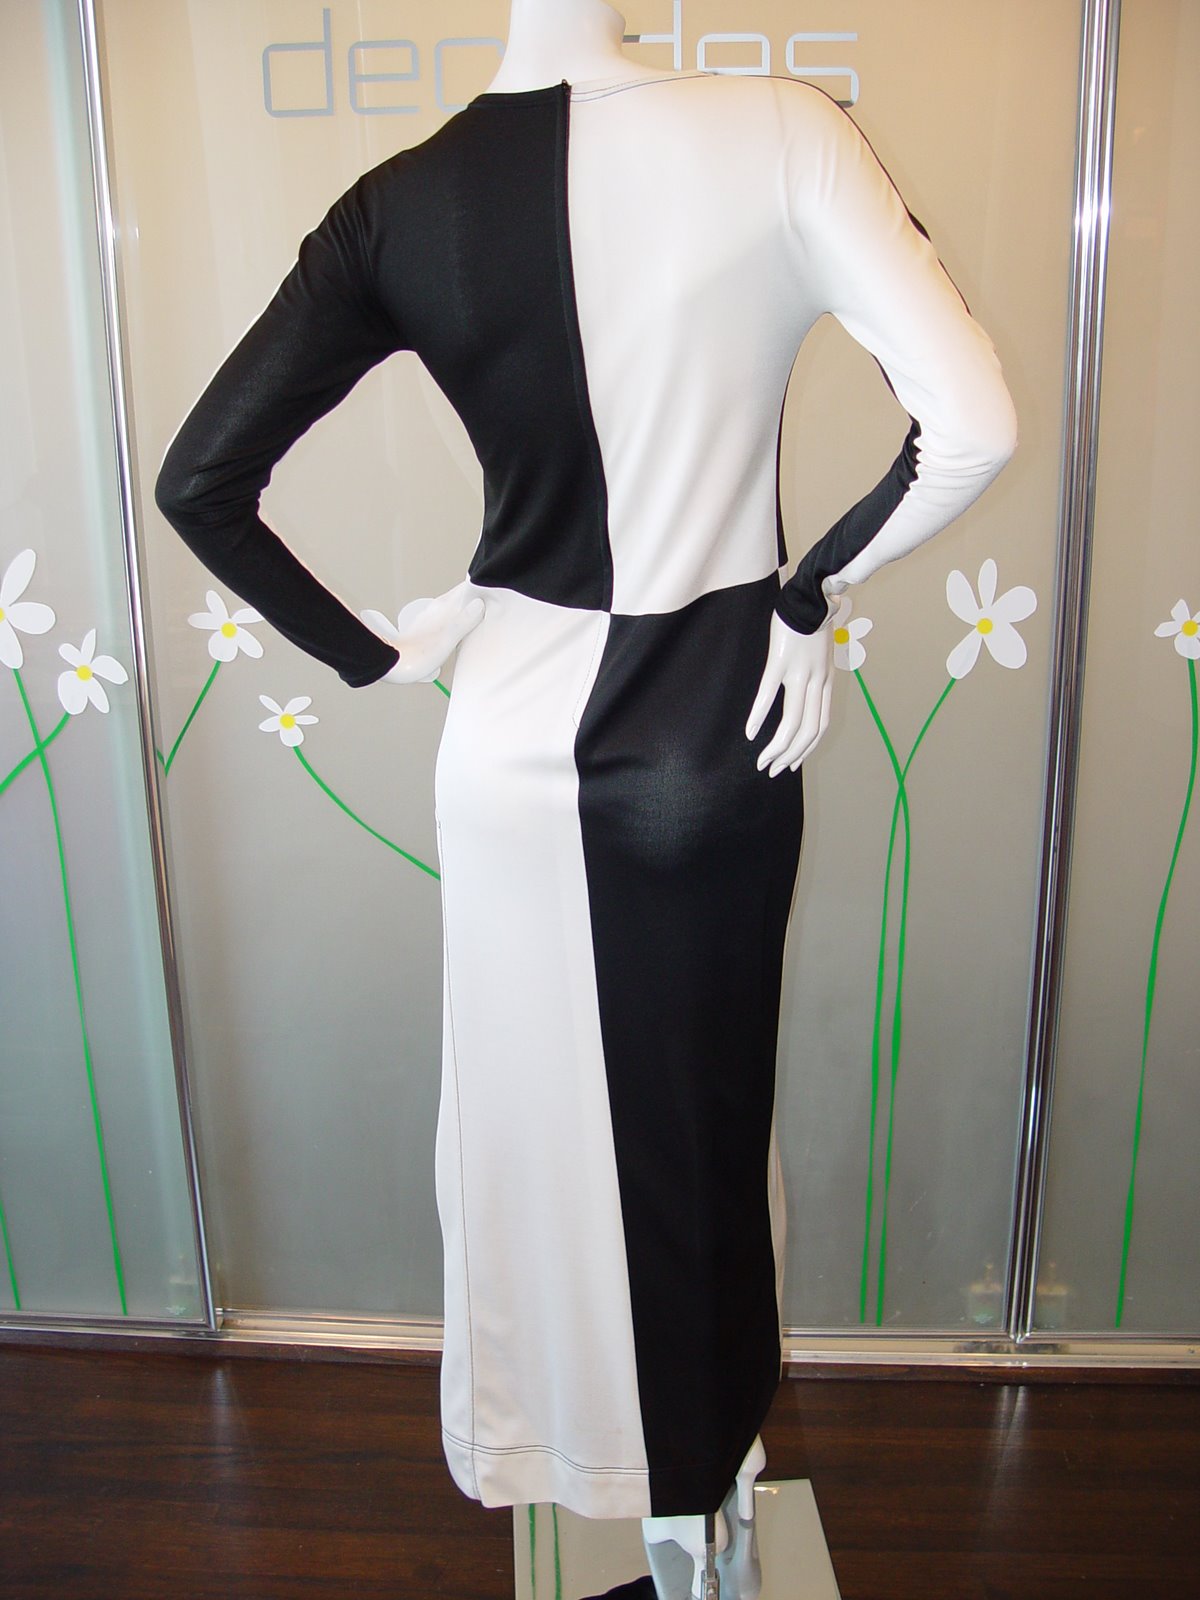 Rudi Gernreich for Harmon Knitwear black and white color block dress, 